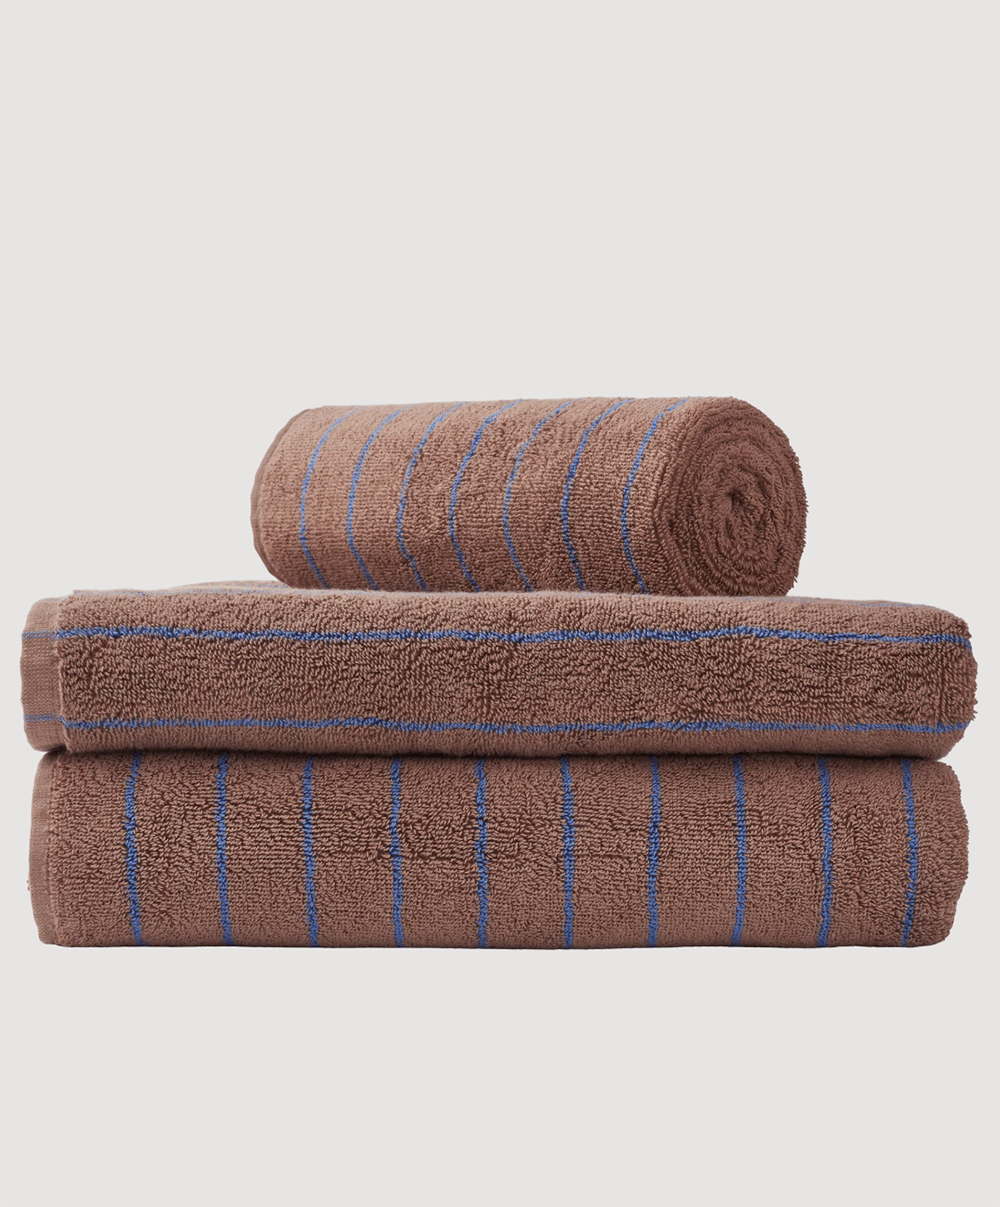 Bongusta - Naram Towel (Camel & Ultramarine blue)